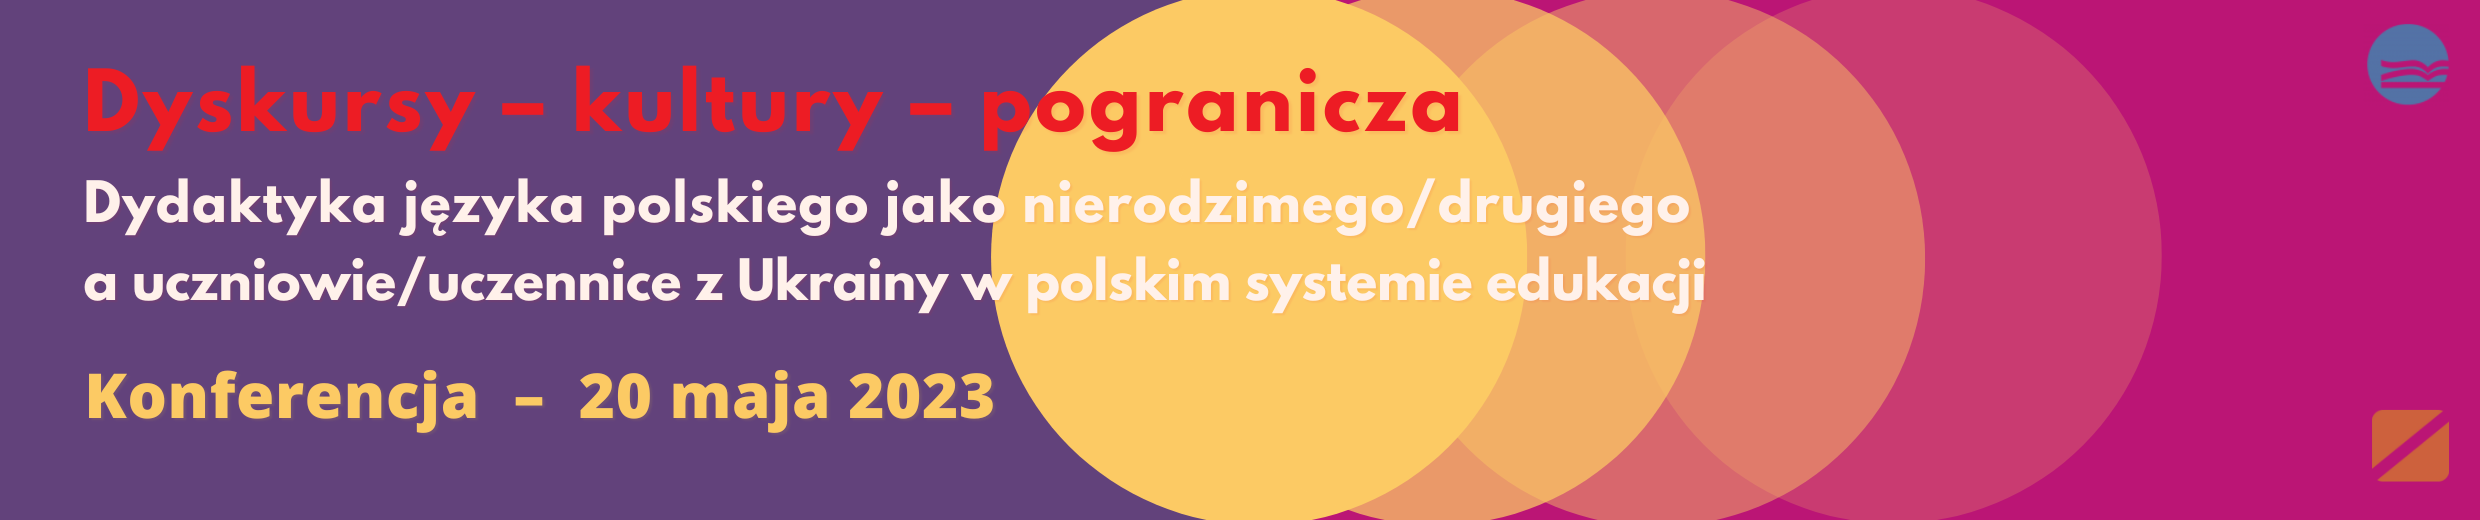 banery konferencja jezyk polski jako drugi